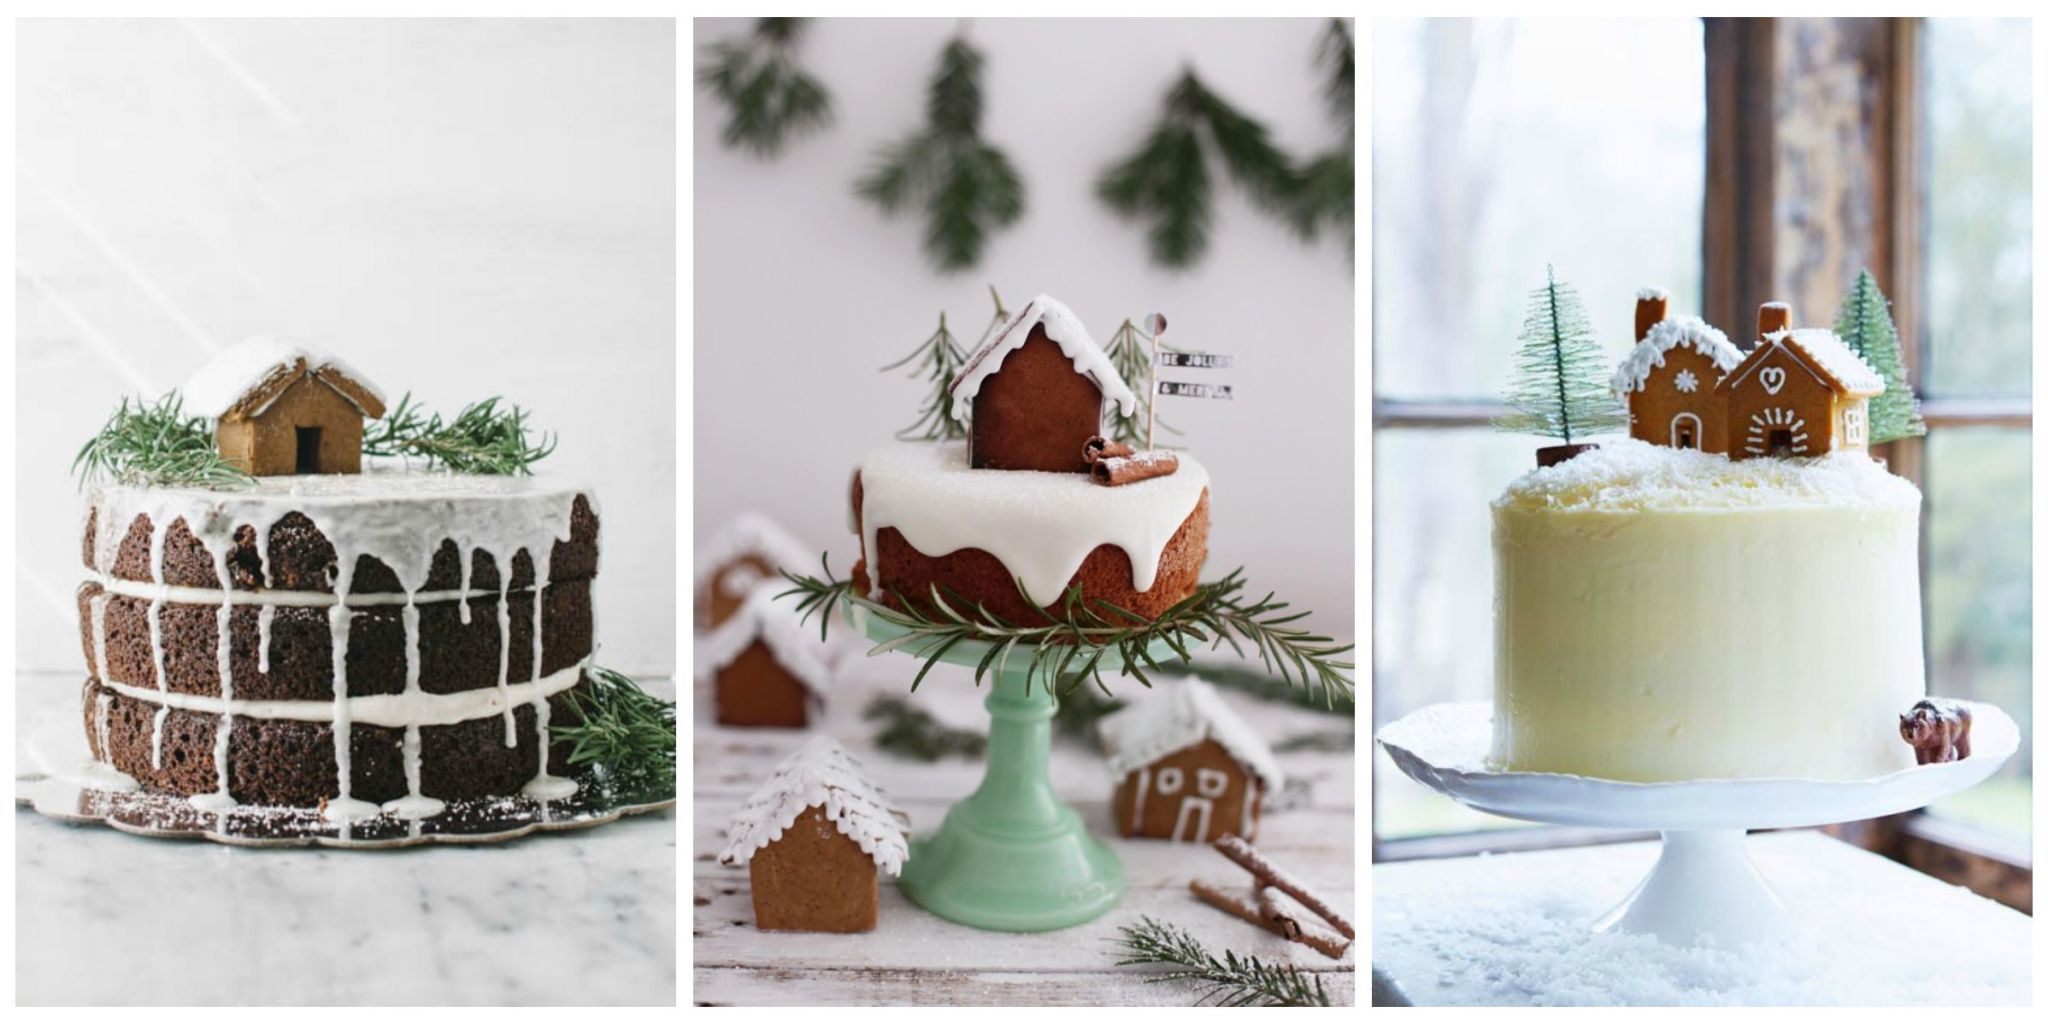 house warming cake | House cake, Housewarming cake, Housewarming party  decorations